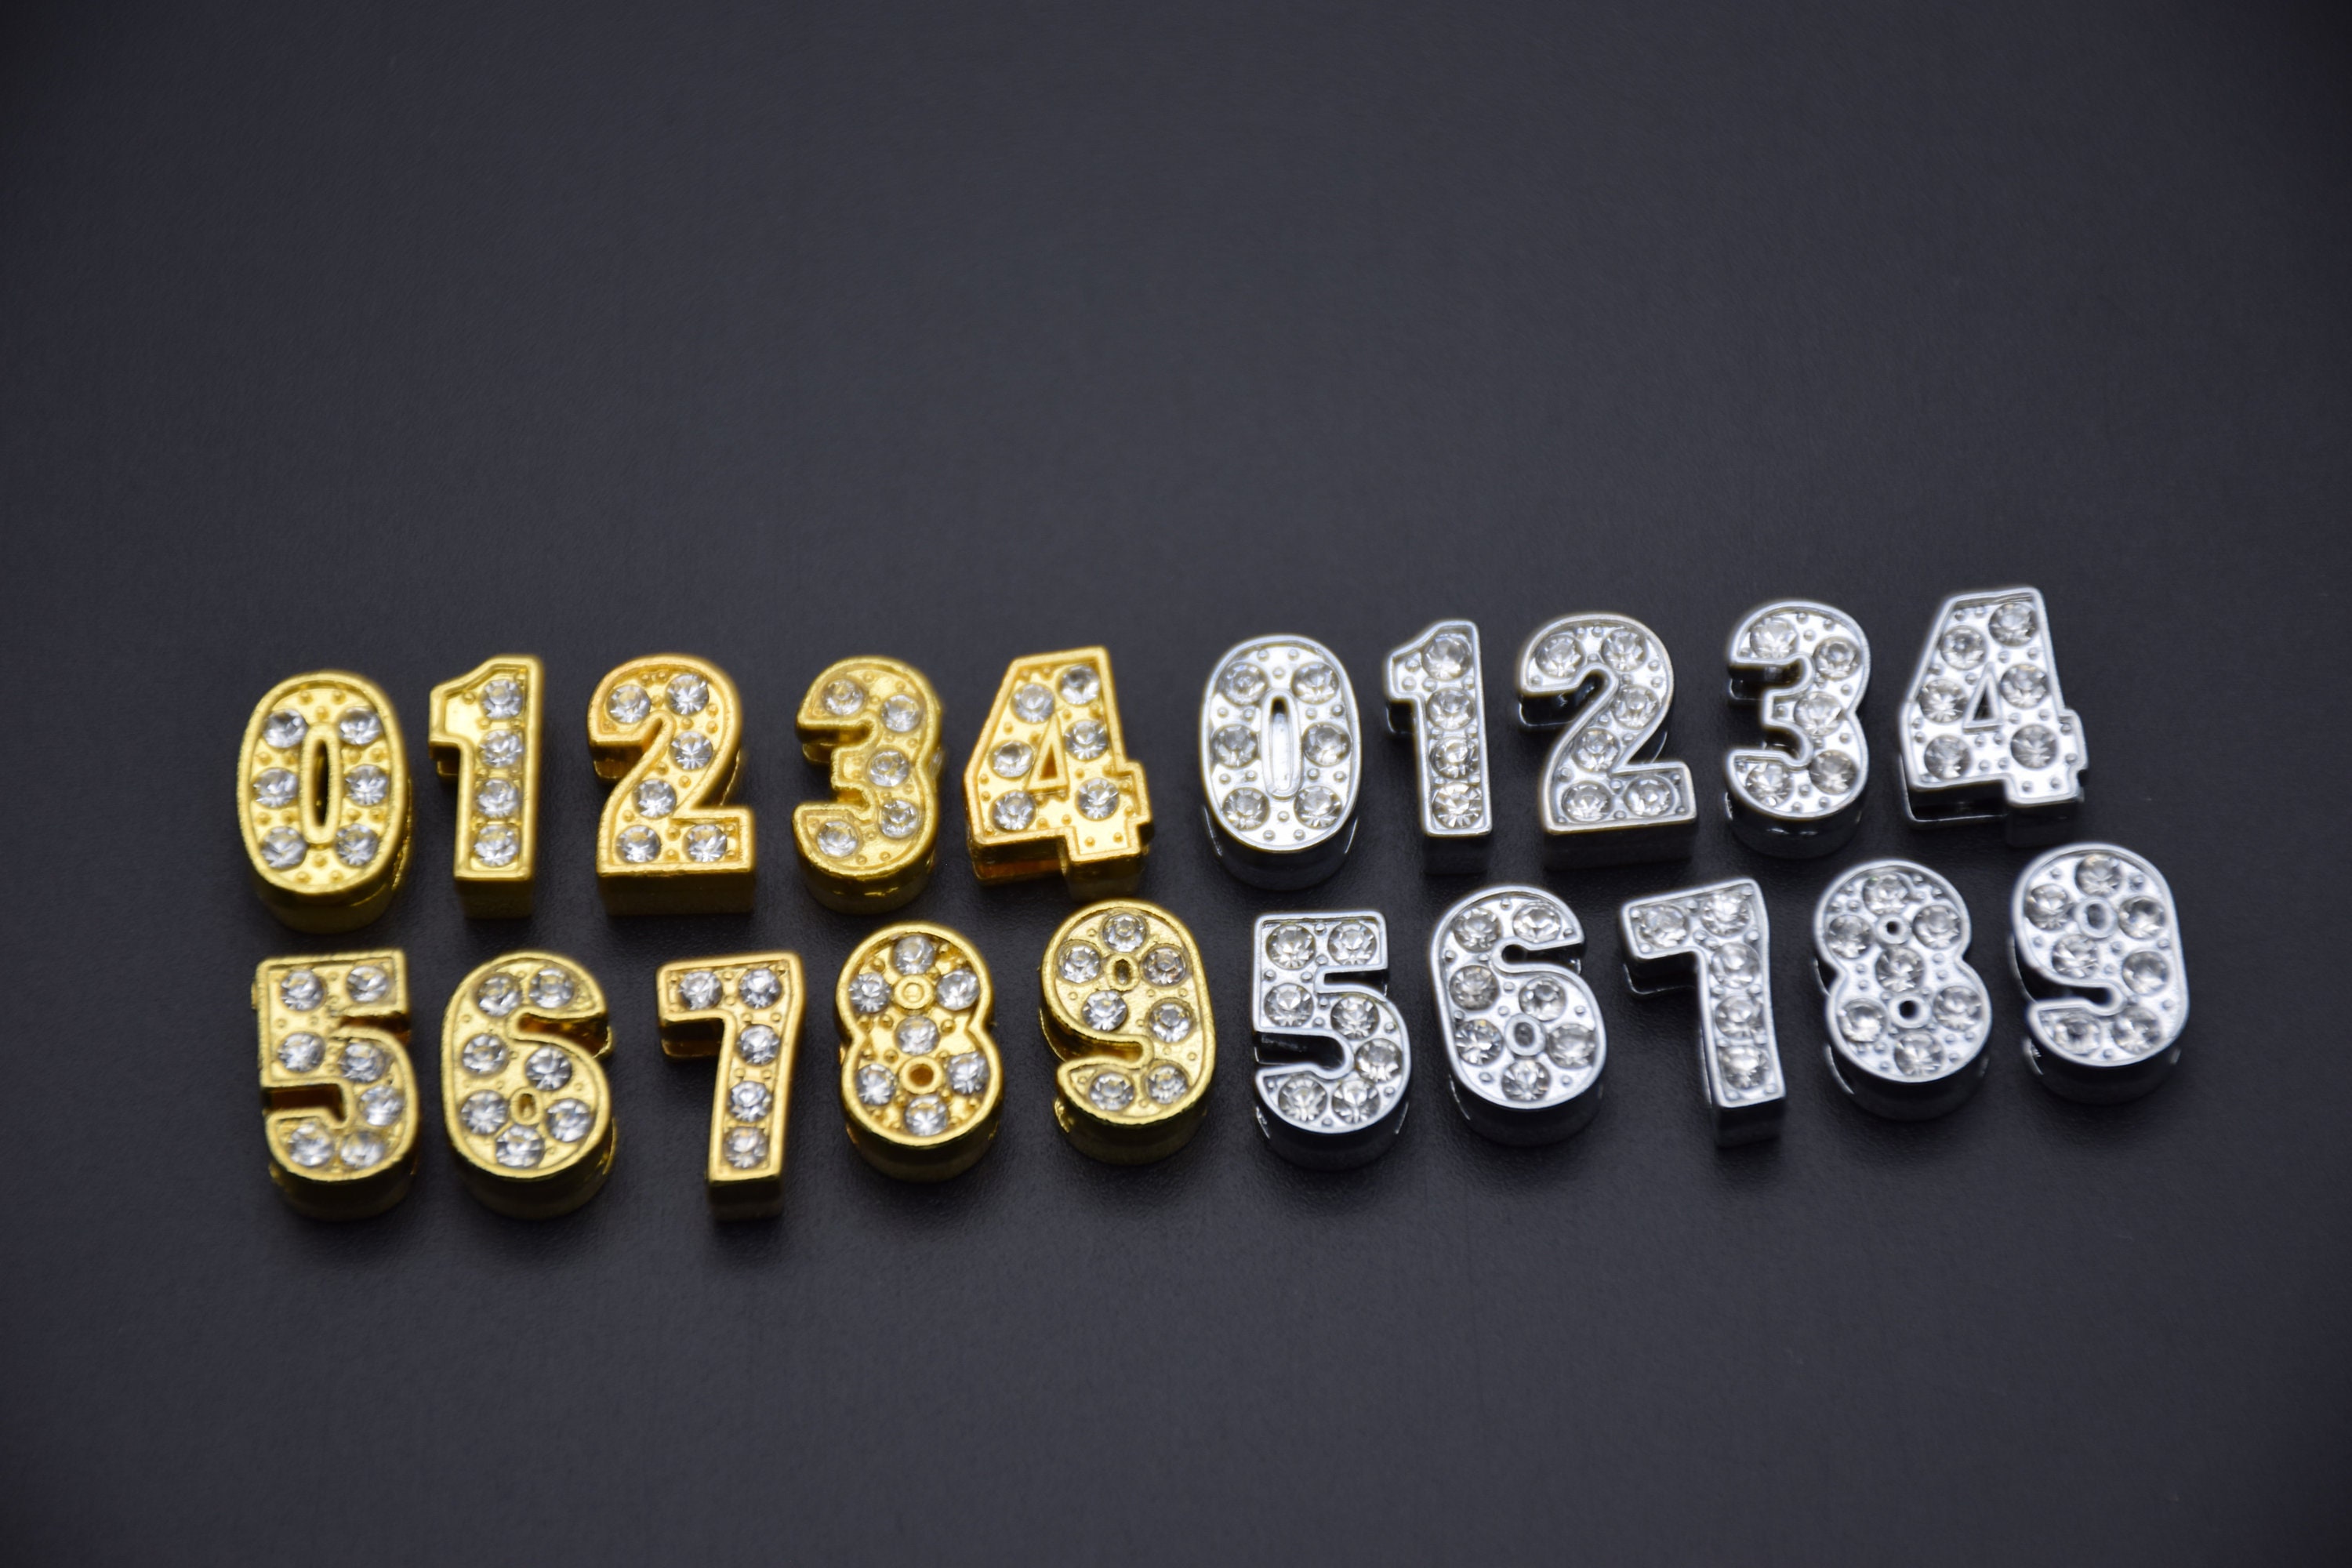 10pcs/lot 10mm Gold Slide Number, Full Rhinestone 0-9 Slide Charms, Fit DIY Wristband & Bracelet LSSL034